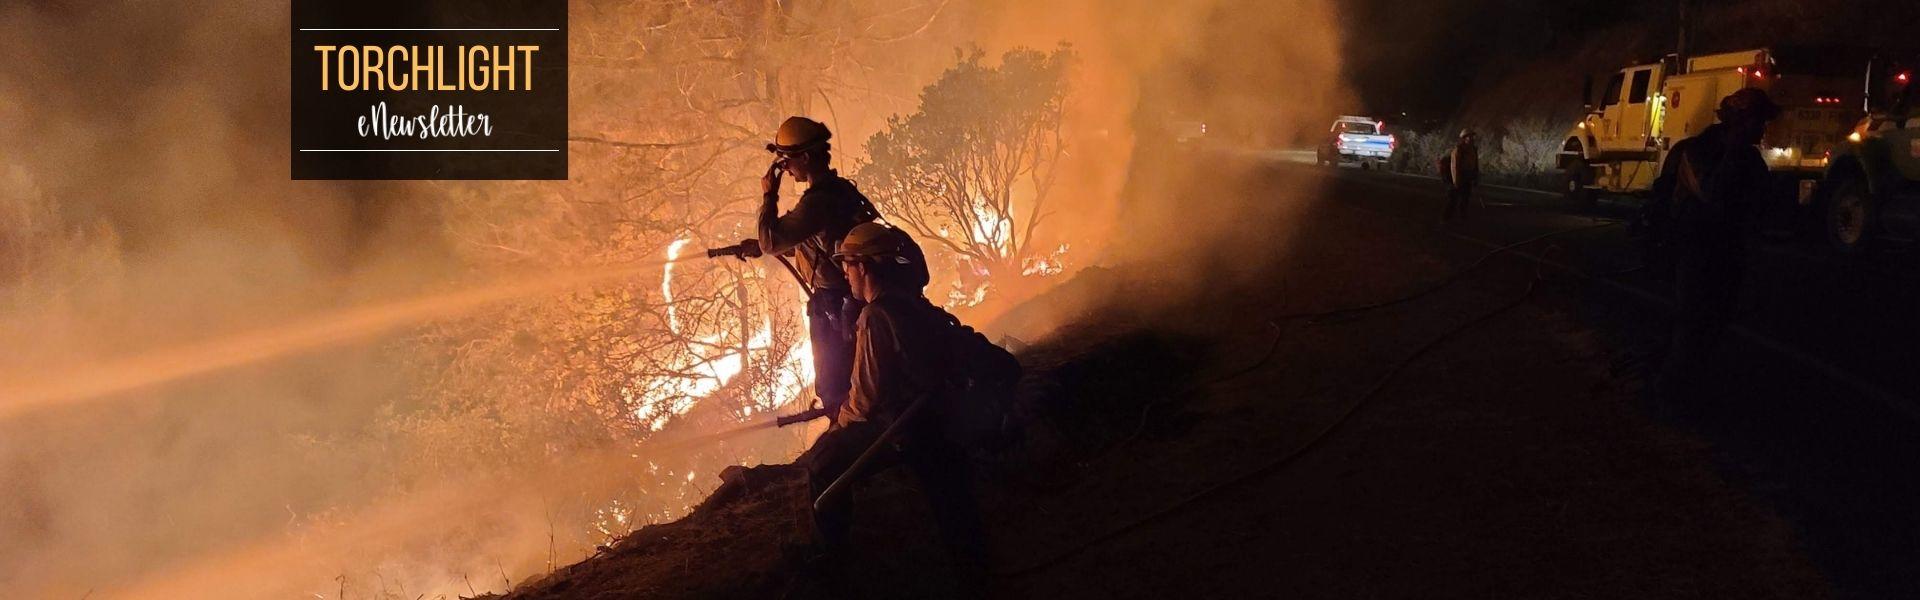 Jeff Runck fighting a wildfire